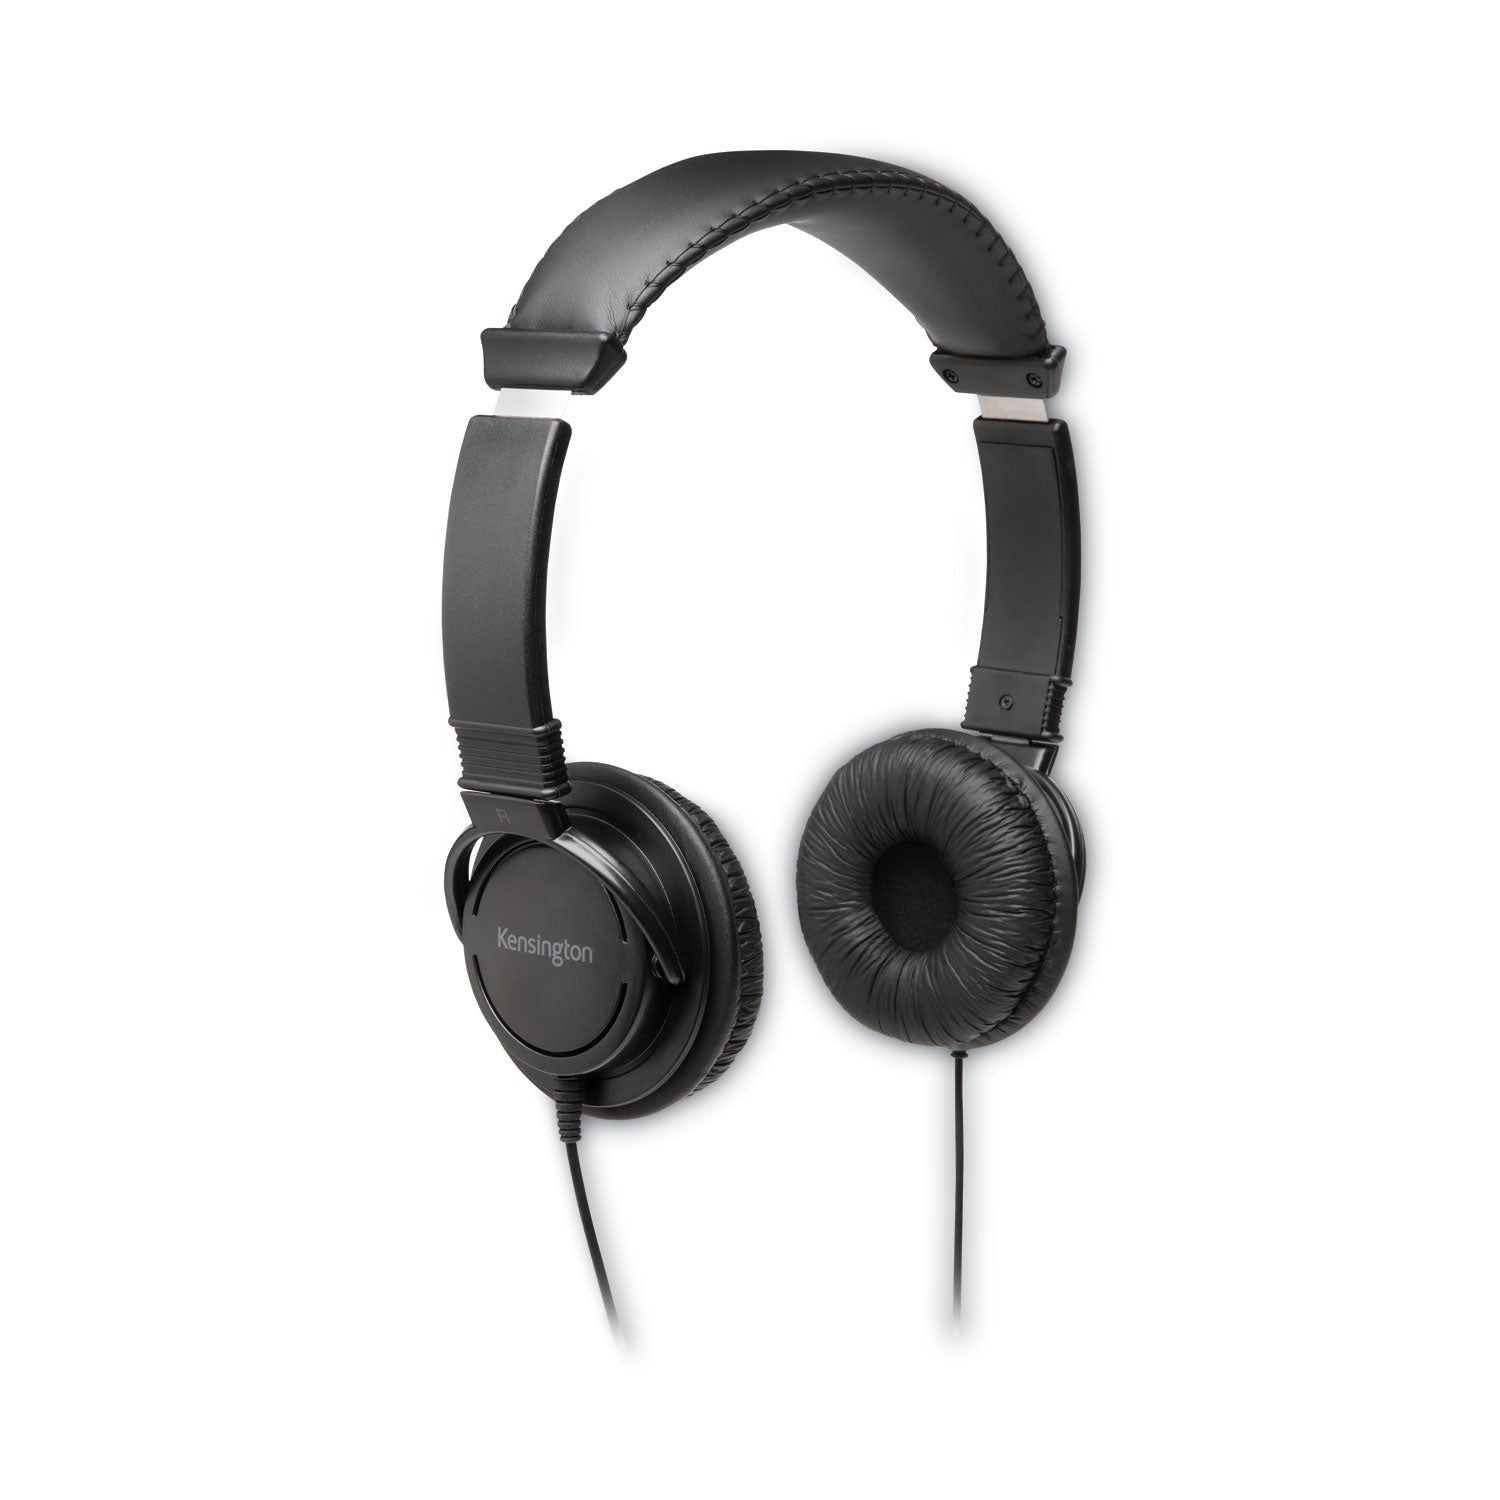 hi-fi-headphones-6-ft-cord-black_kmwk97600ww - 2